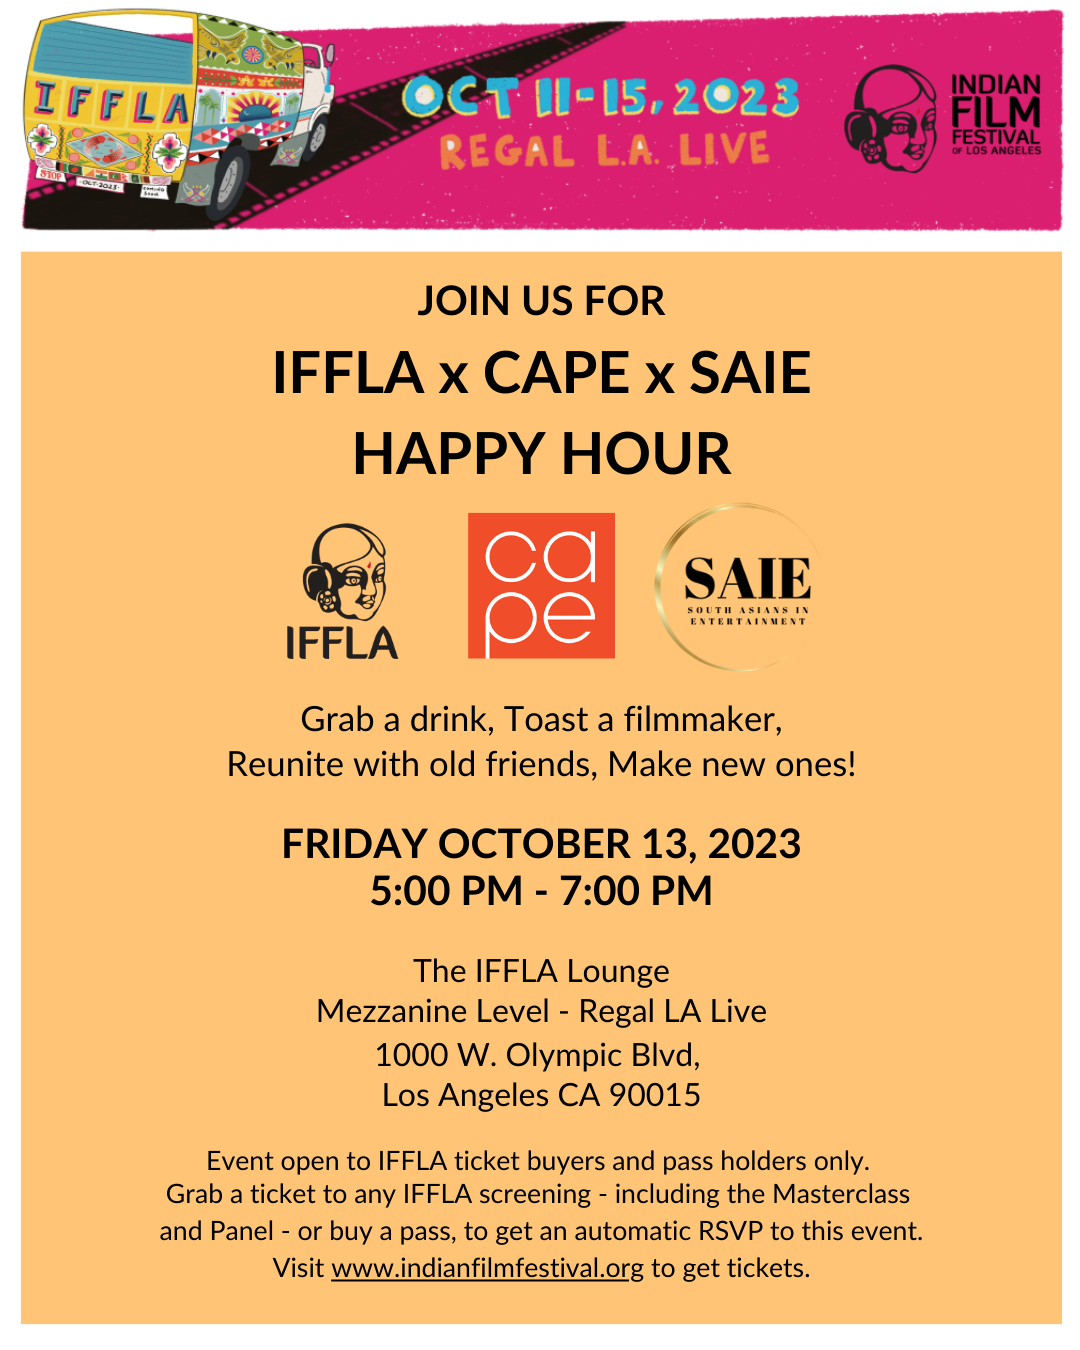 IFFLA-CAPE-SAIE Happy Hour